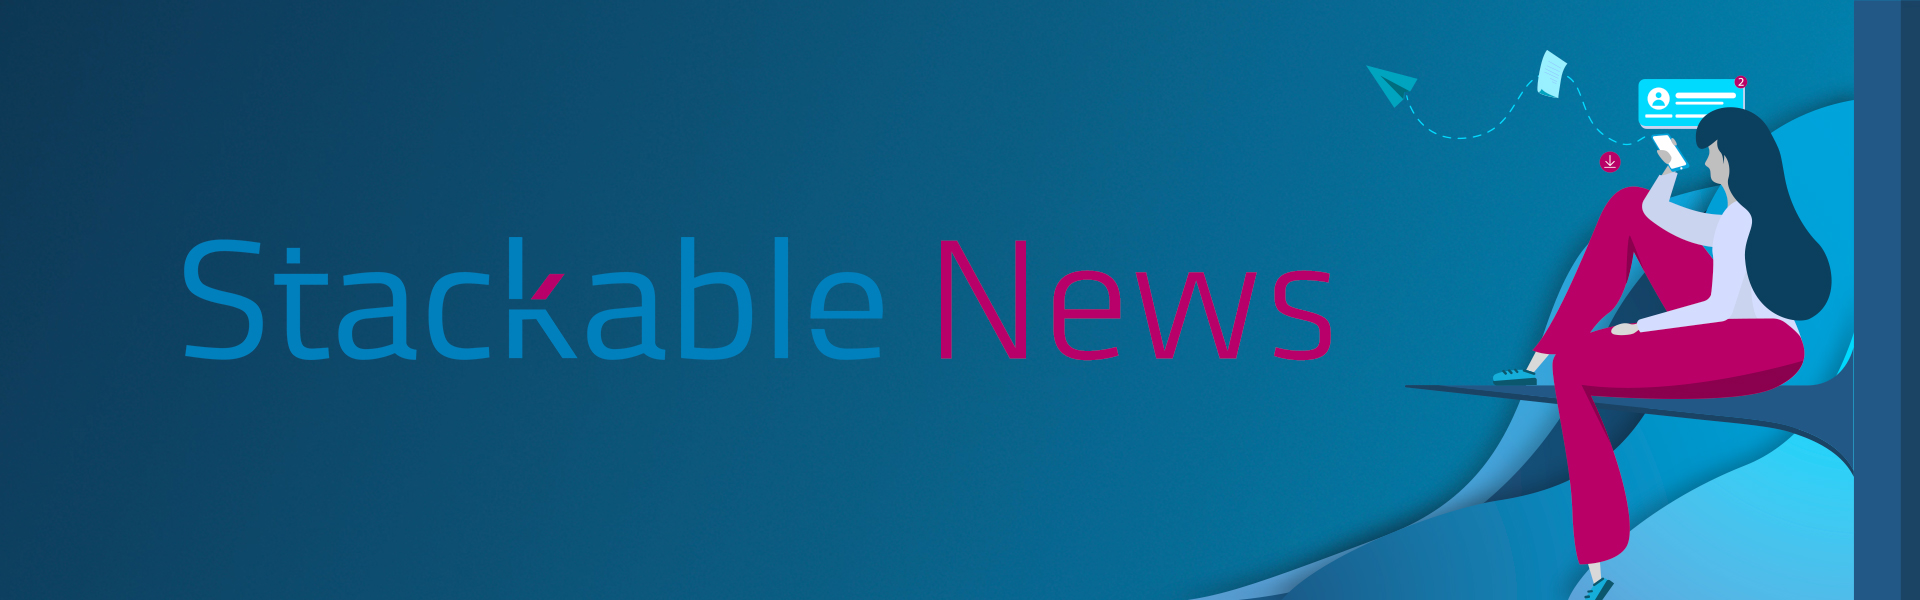 stackable-news-header-blau